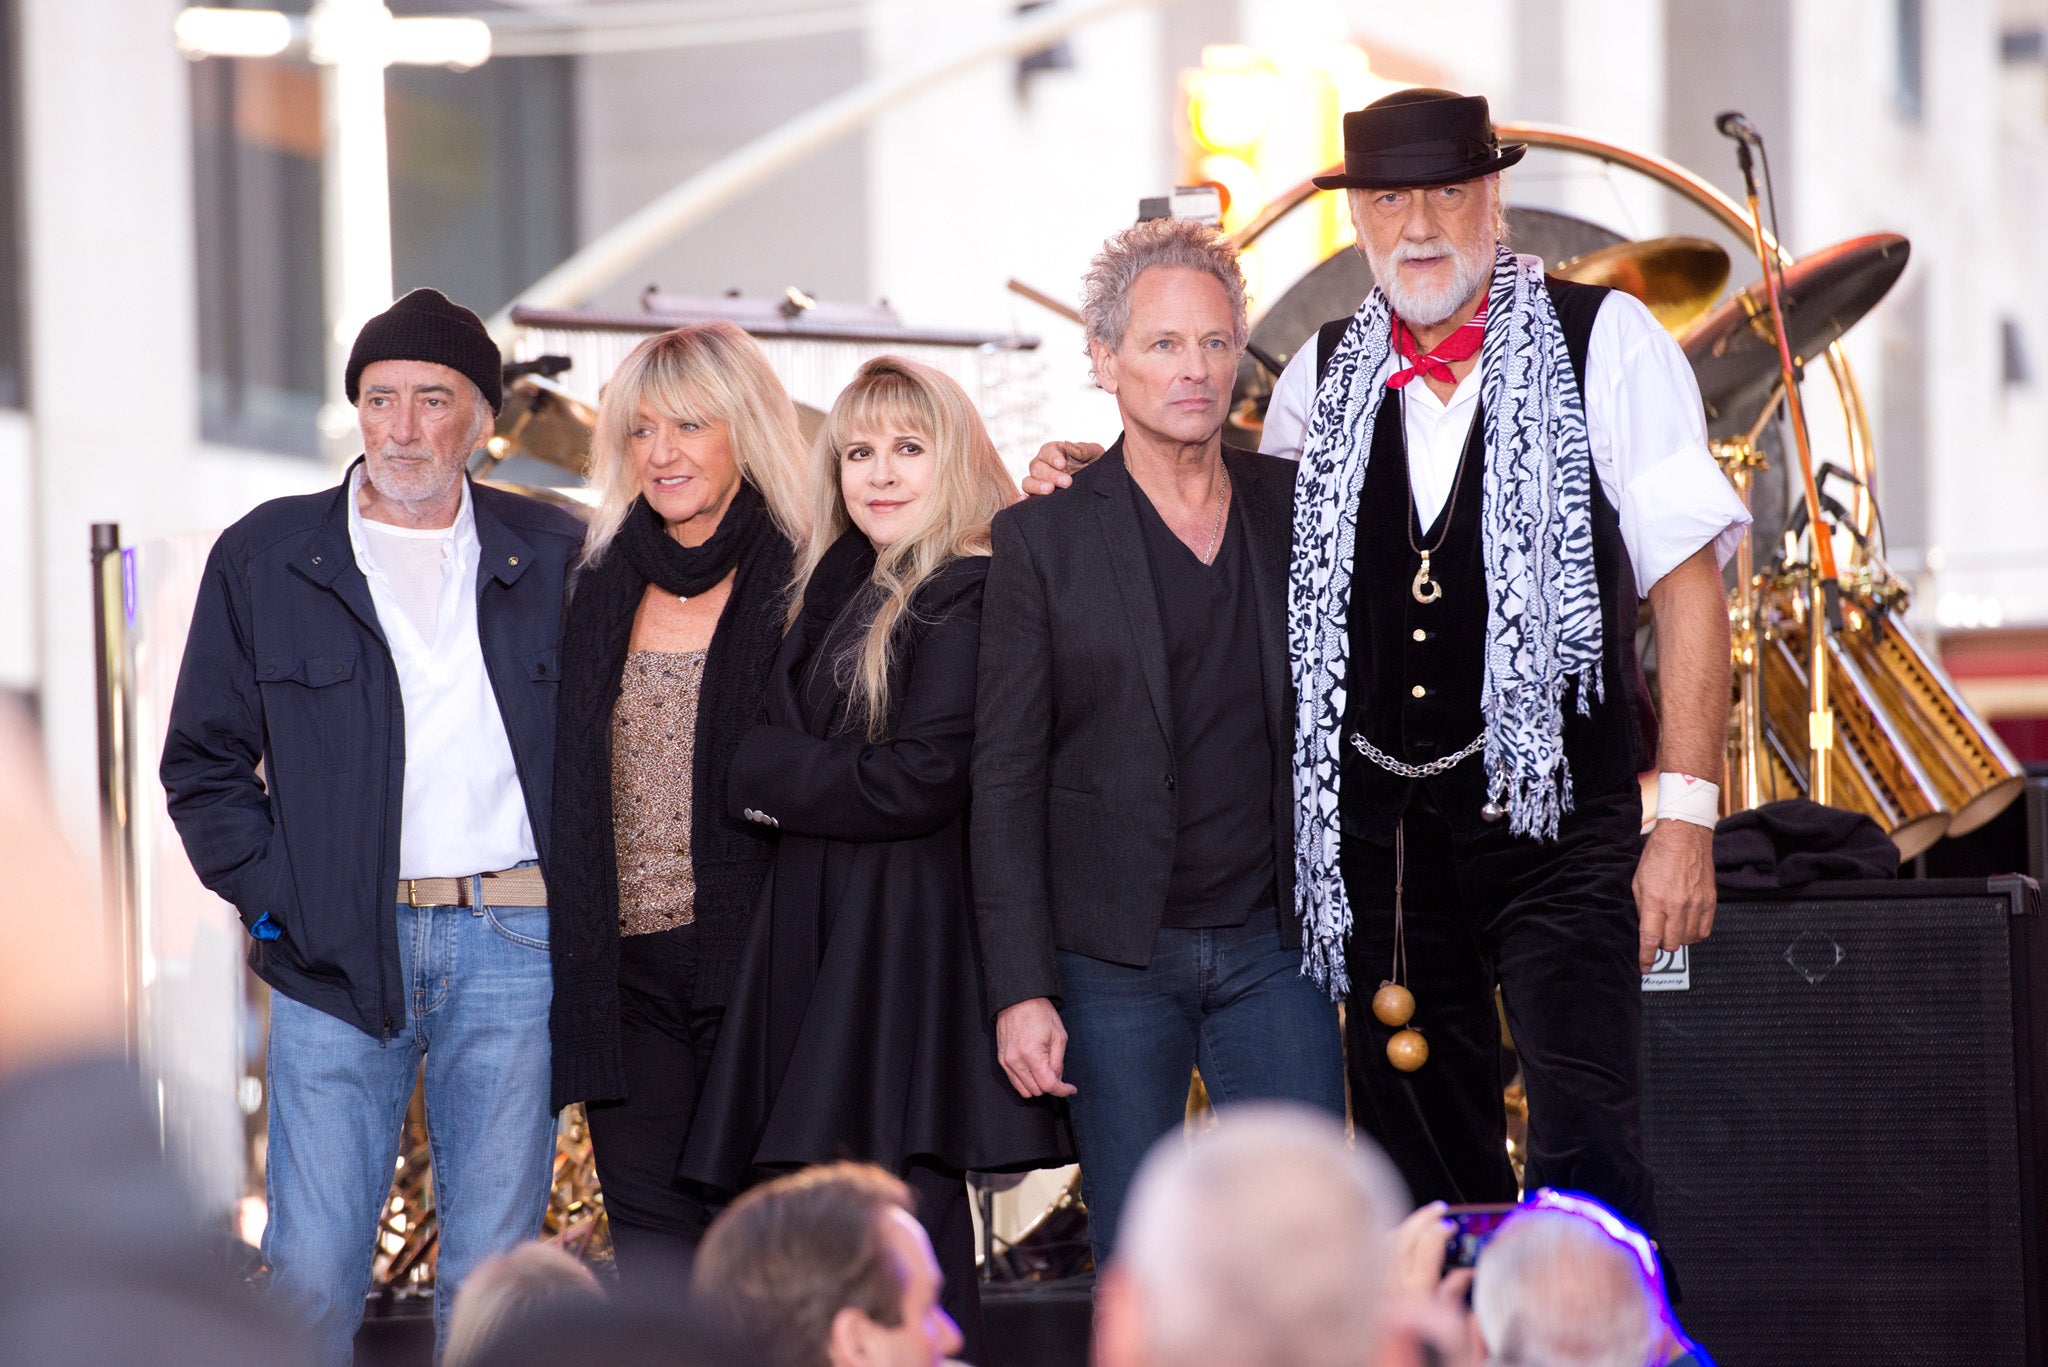 Fleetwood Mac will reunite to tour Europe in 2015